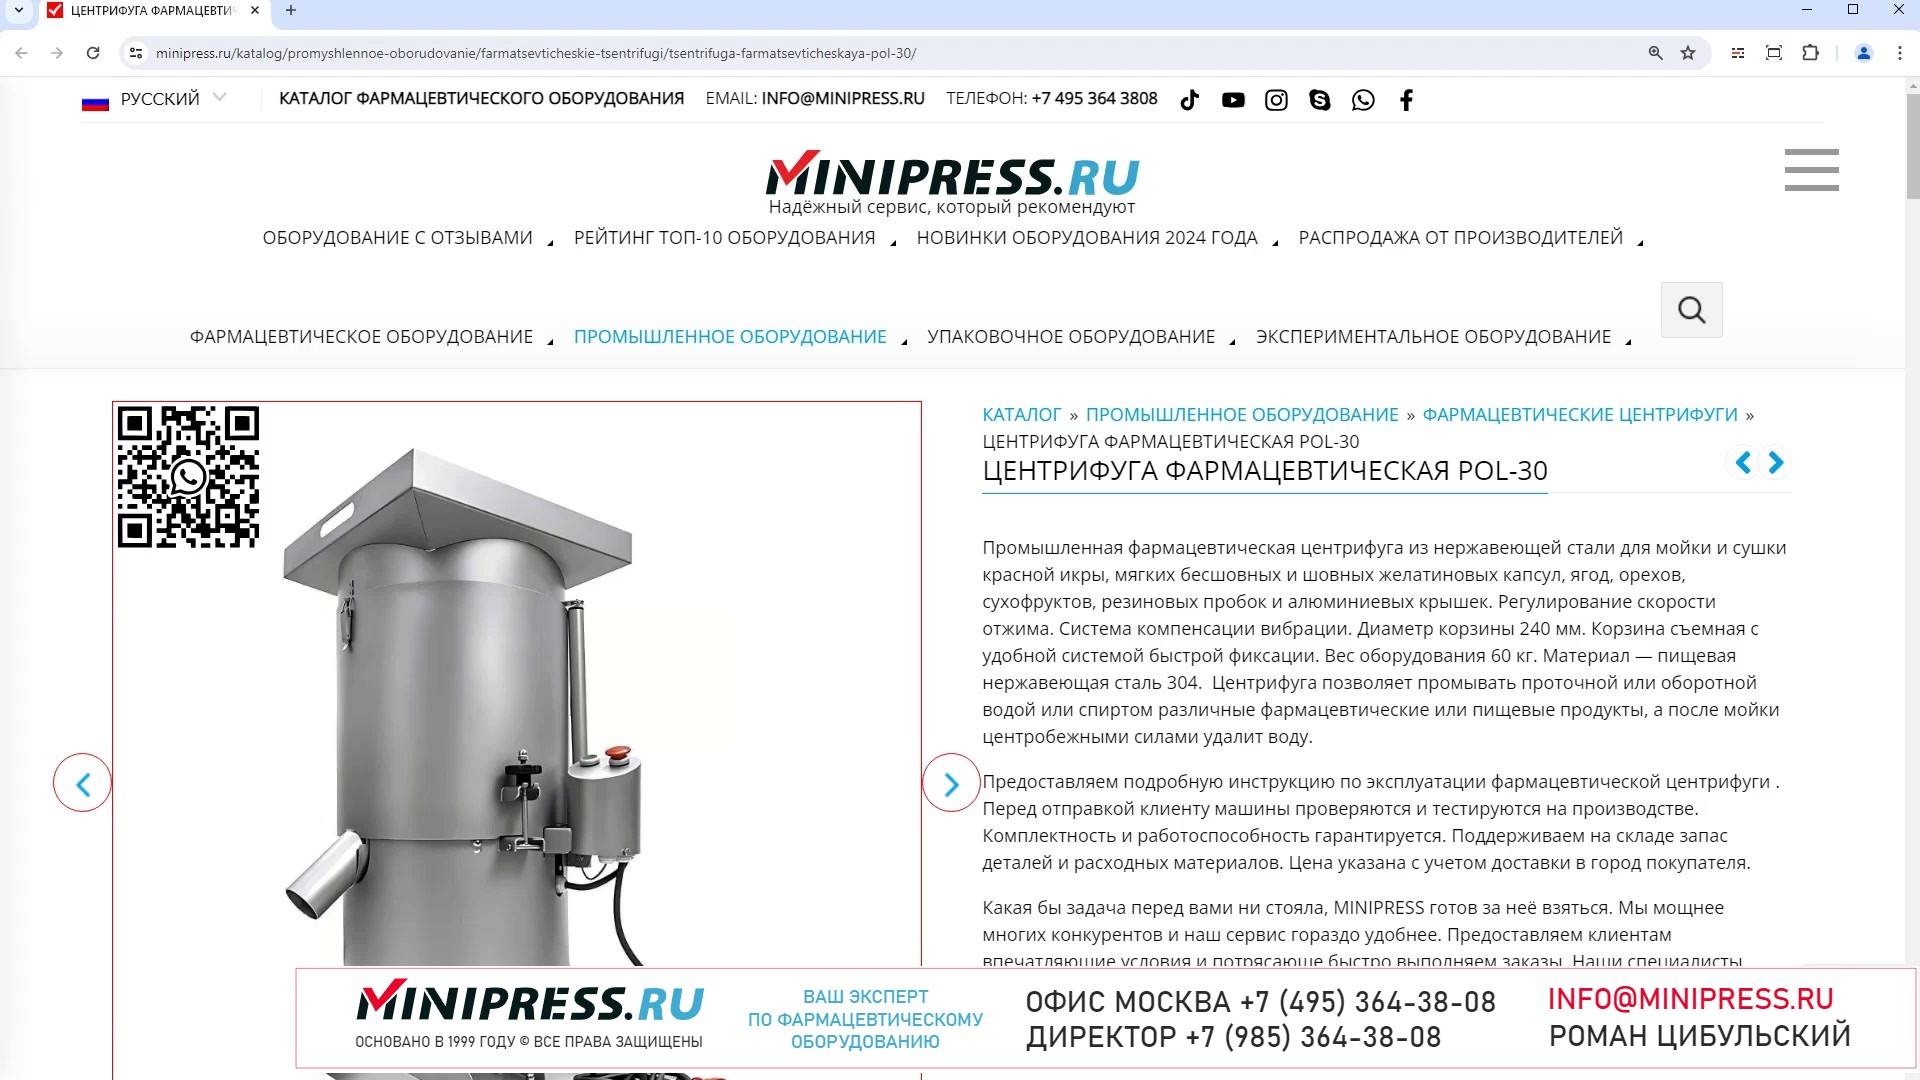 Minipress.ru Центрифуга фармацевтическая POL-30